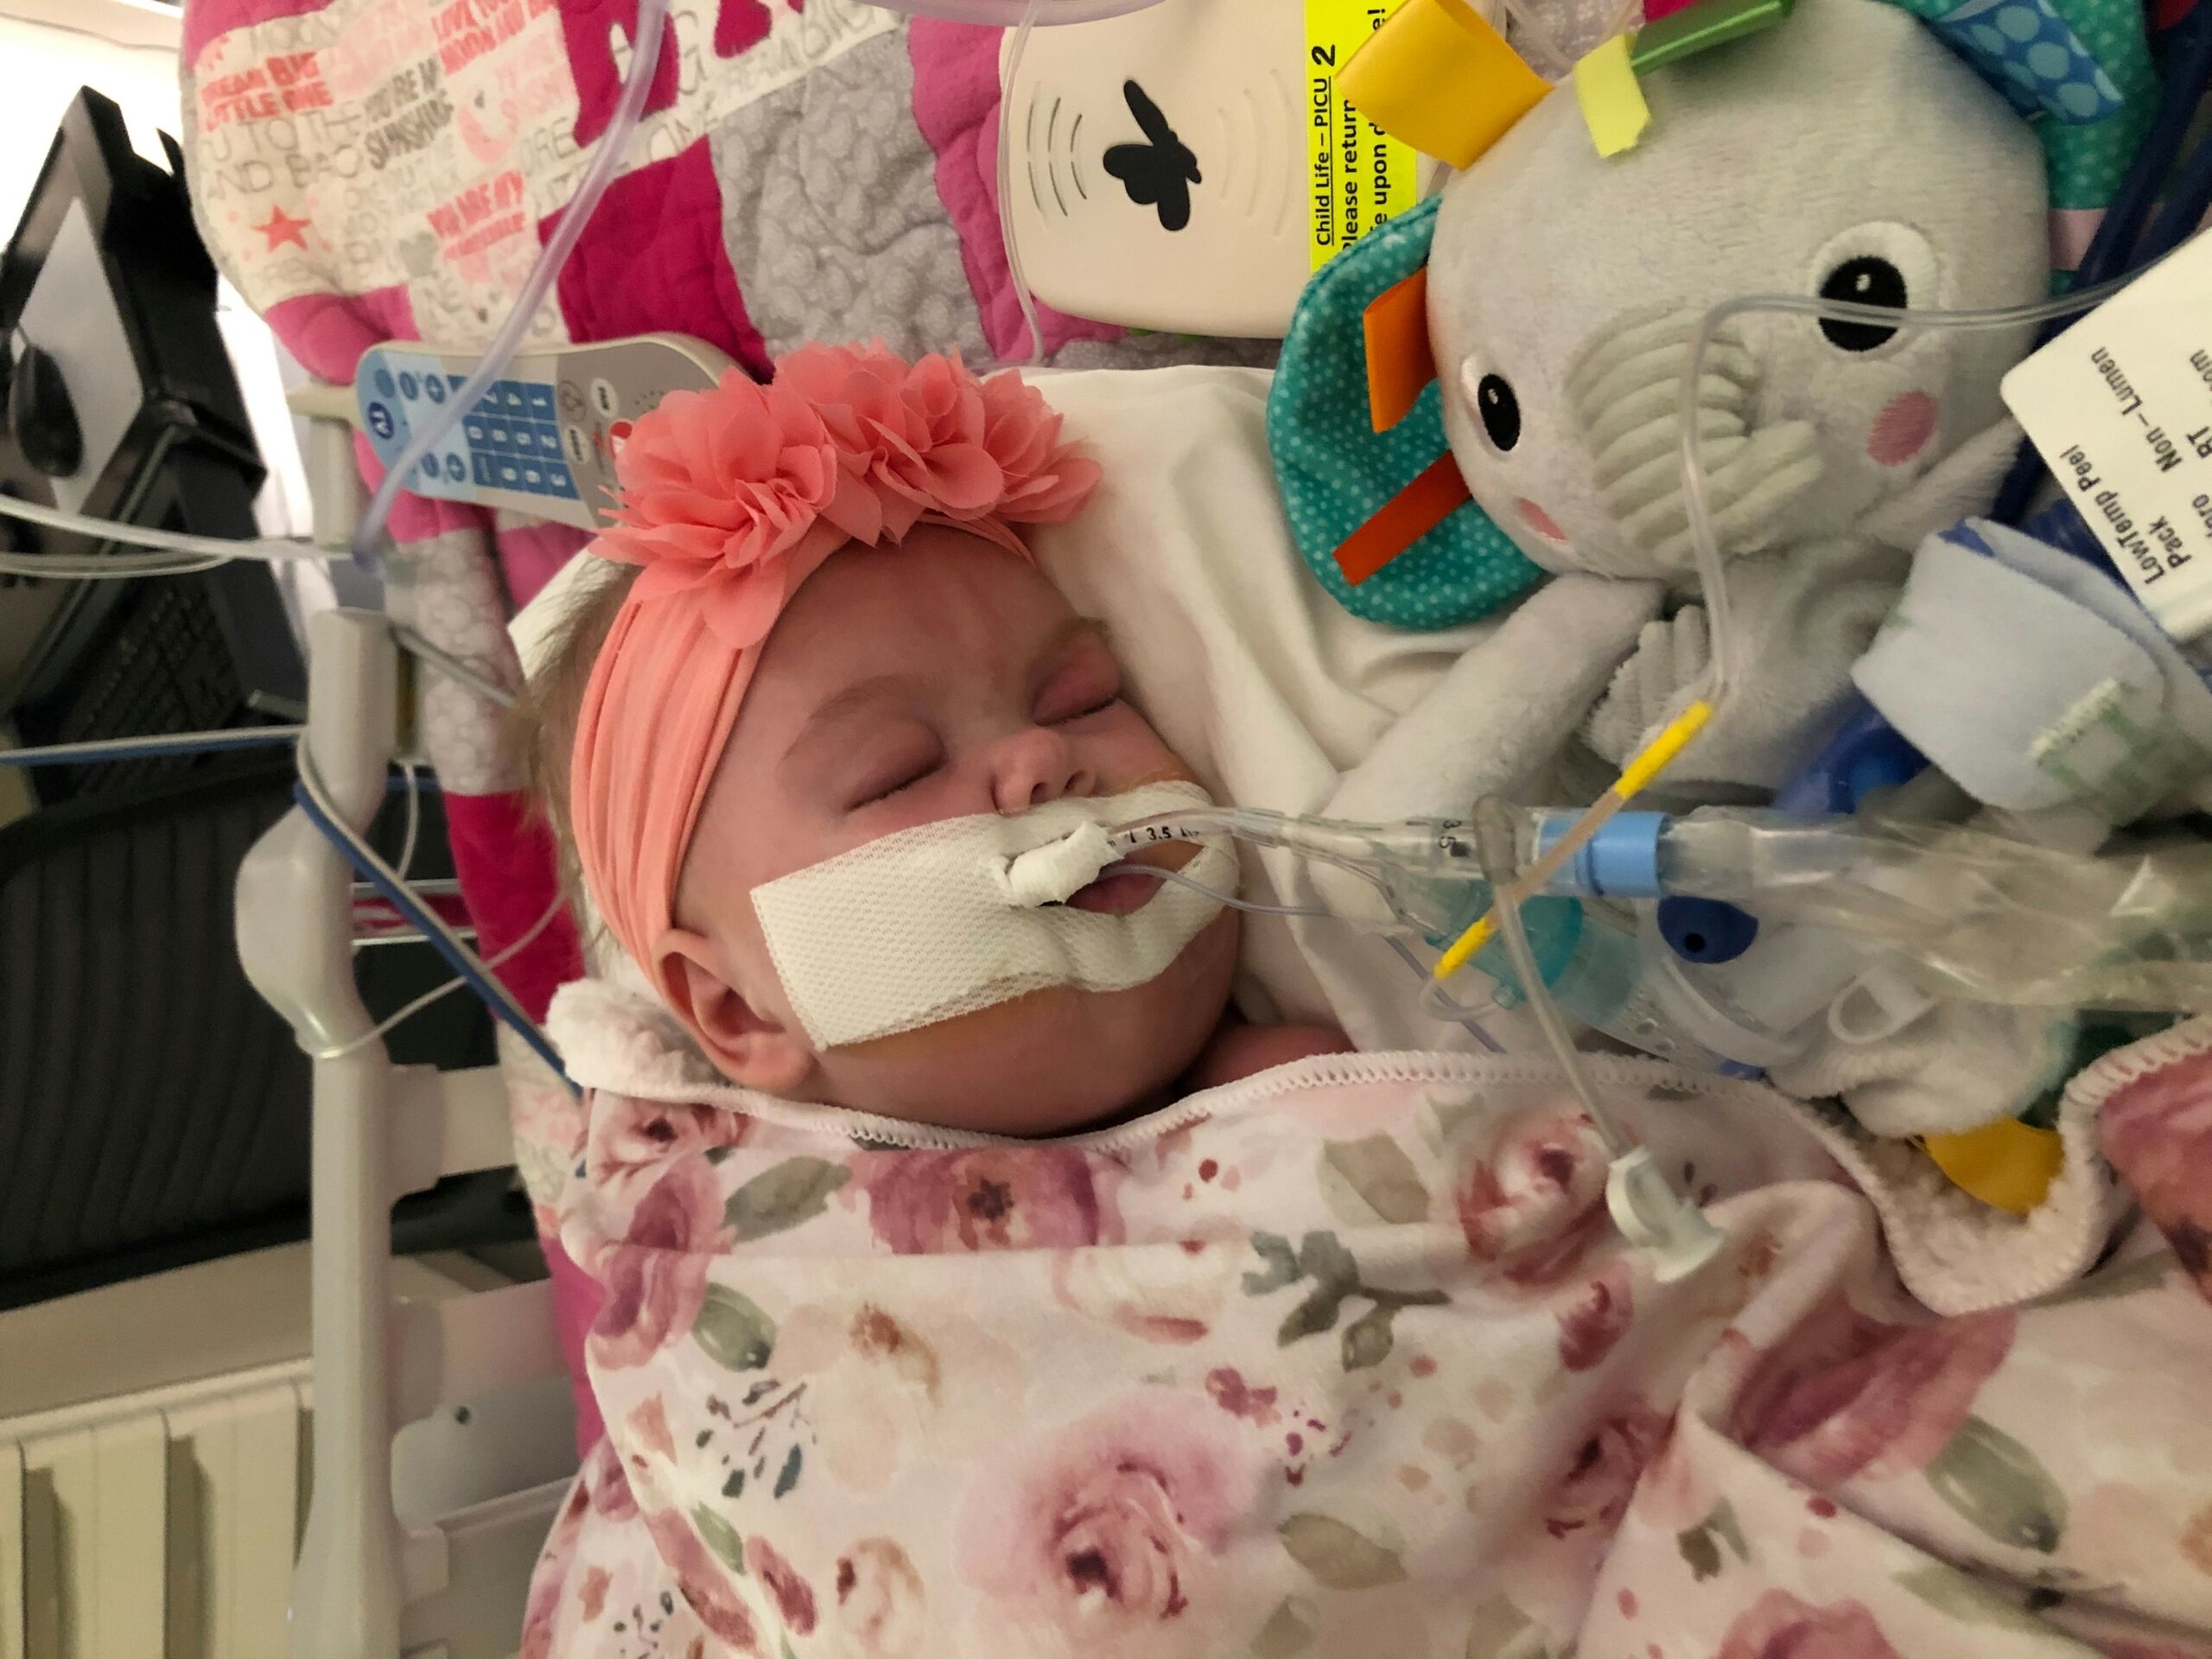 Newborn Emery hooked up to a ventilator